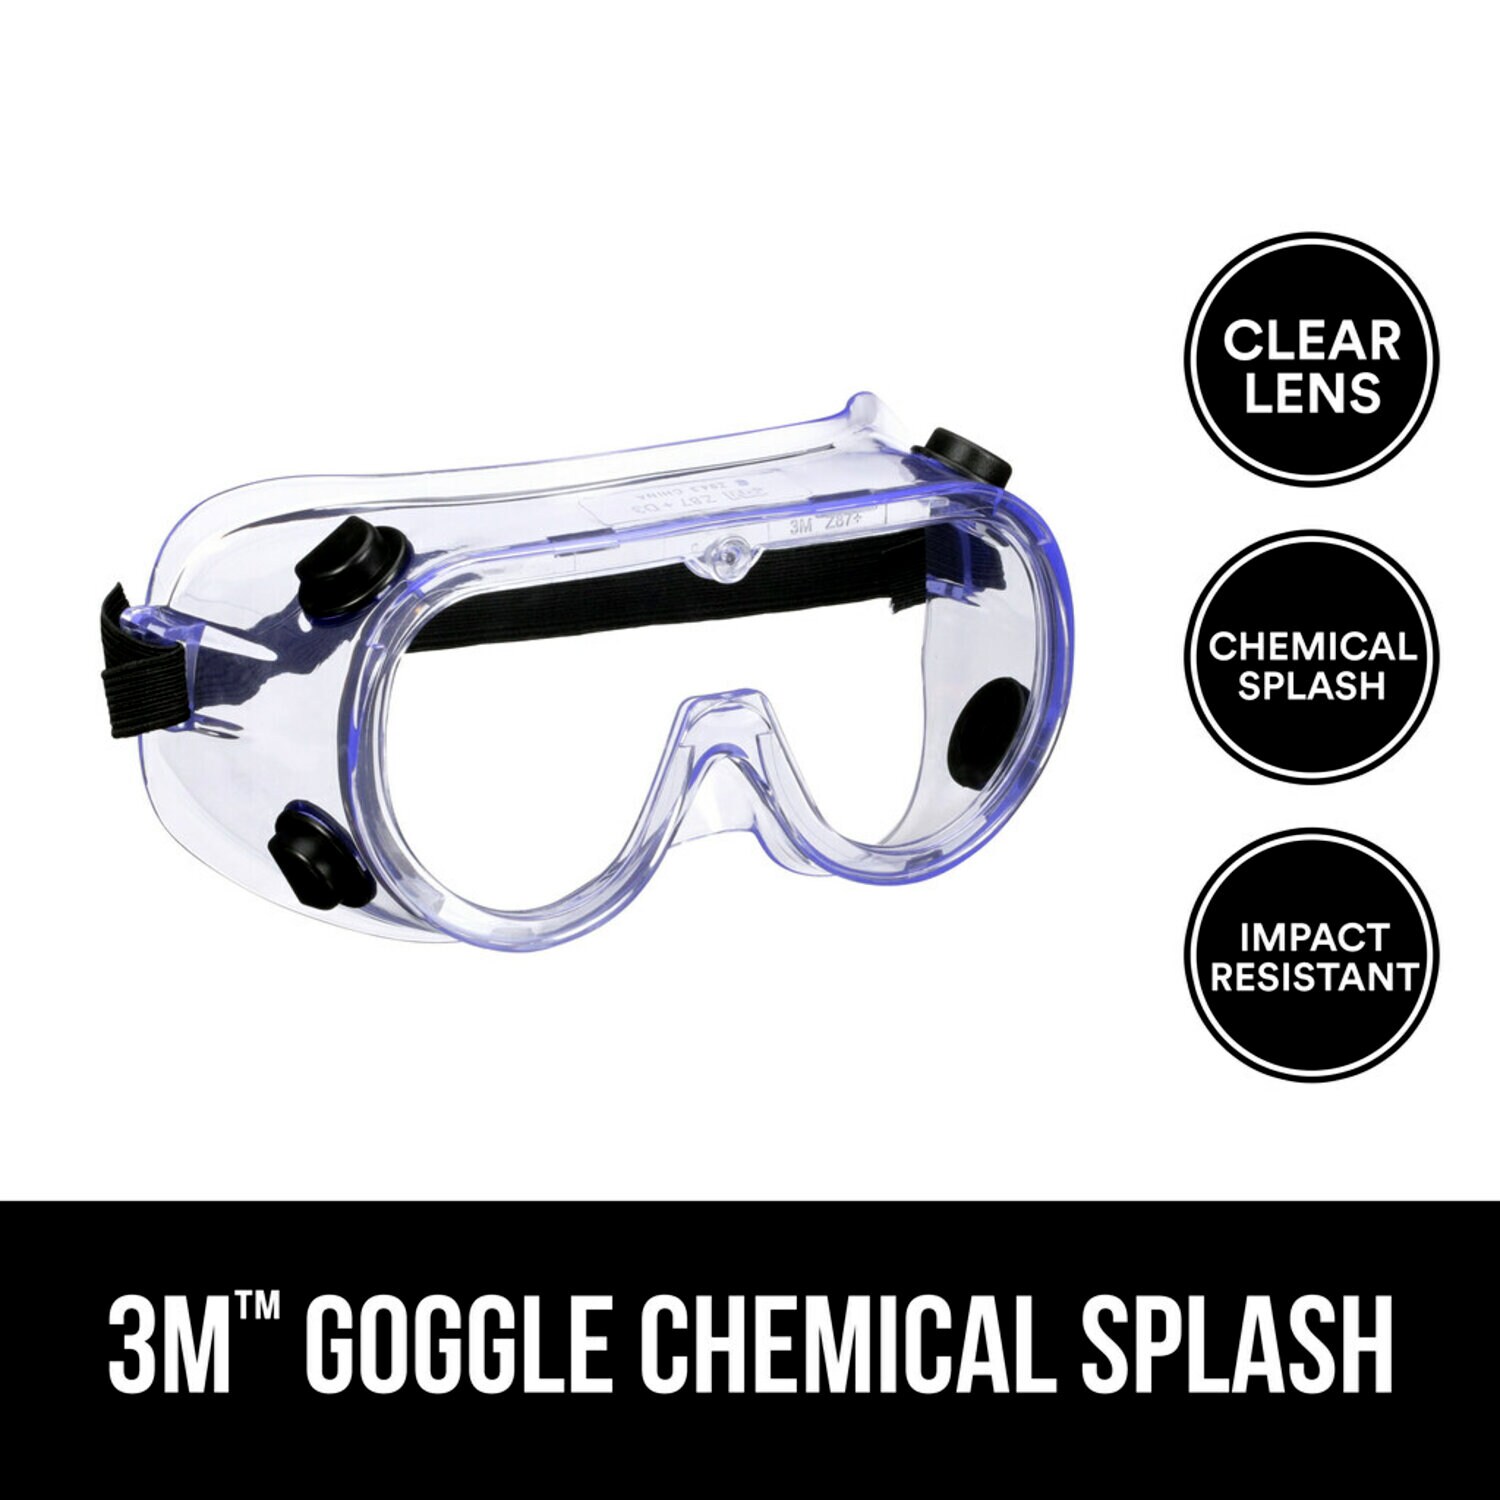 7100159245 - 3M Goggle Chemical Splash, 91252H1-DC-14, Black Strap, Clear Lens,
14/case